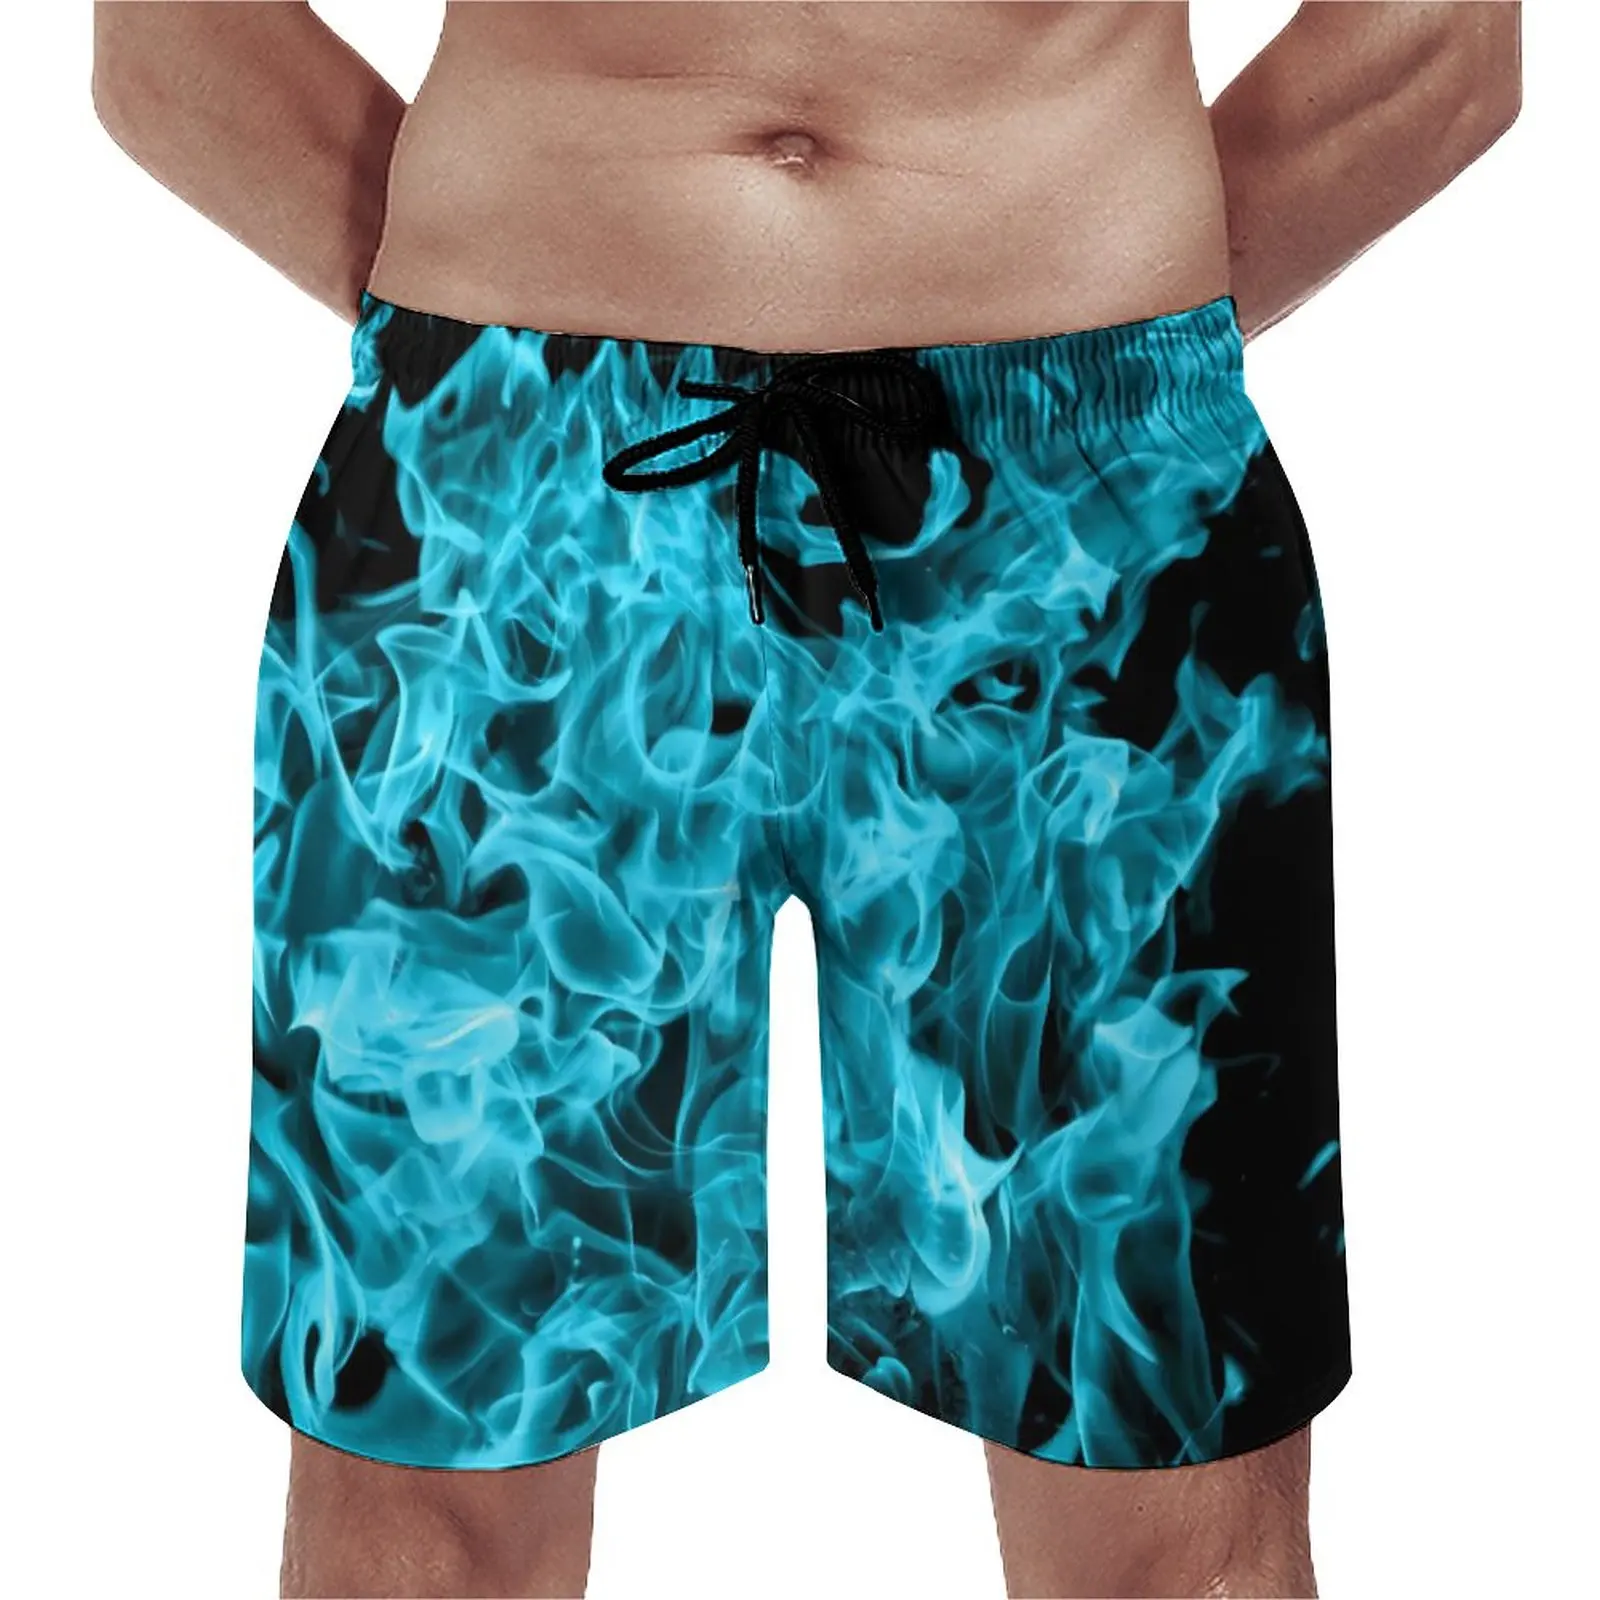 

Fire Aqua Flames Board Shorts Summer Blue Fire Print Fashion Beach Shorts Man Sports Surf Quick Dry Graphic Swim Trunks